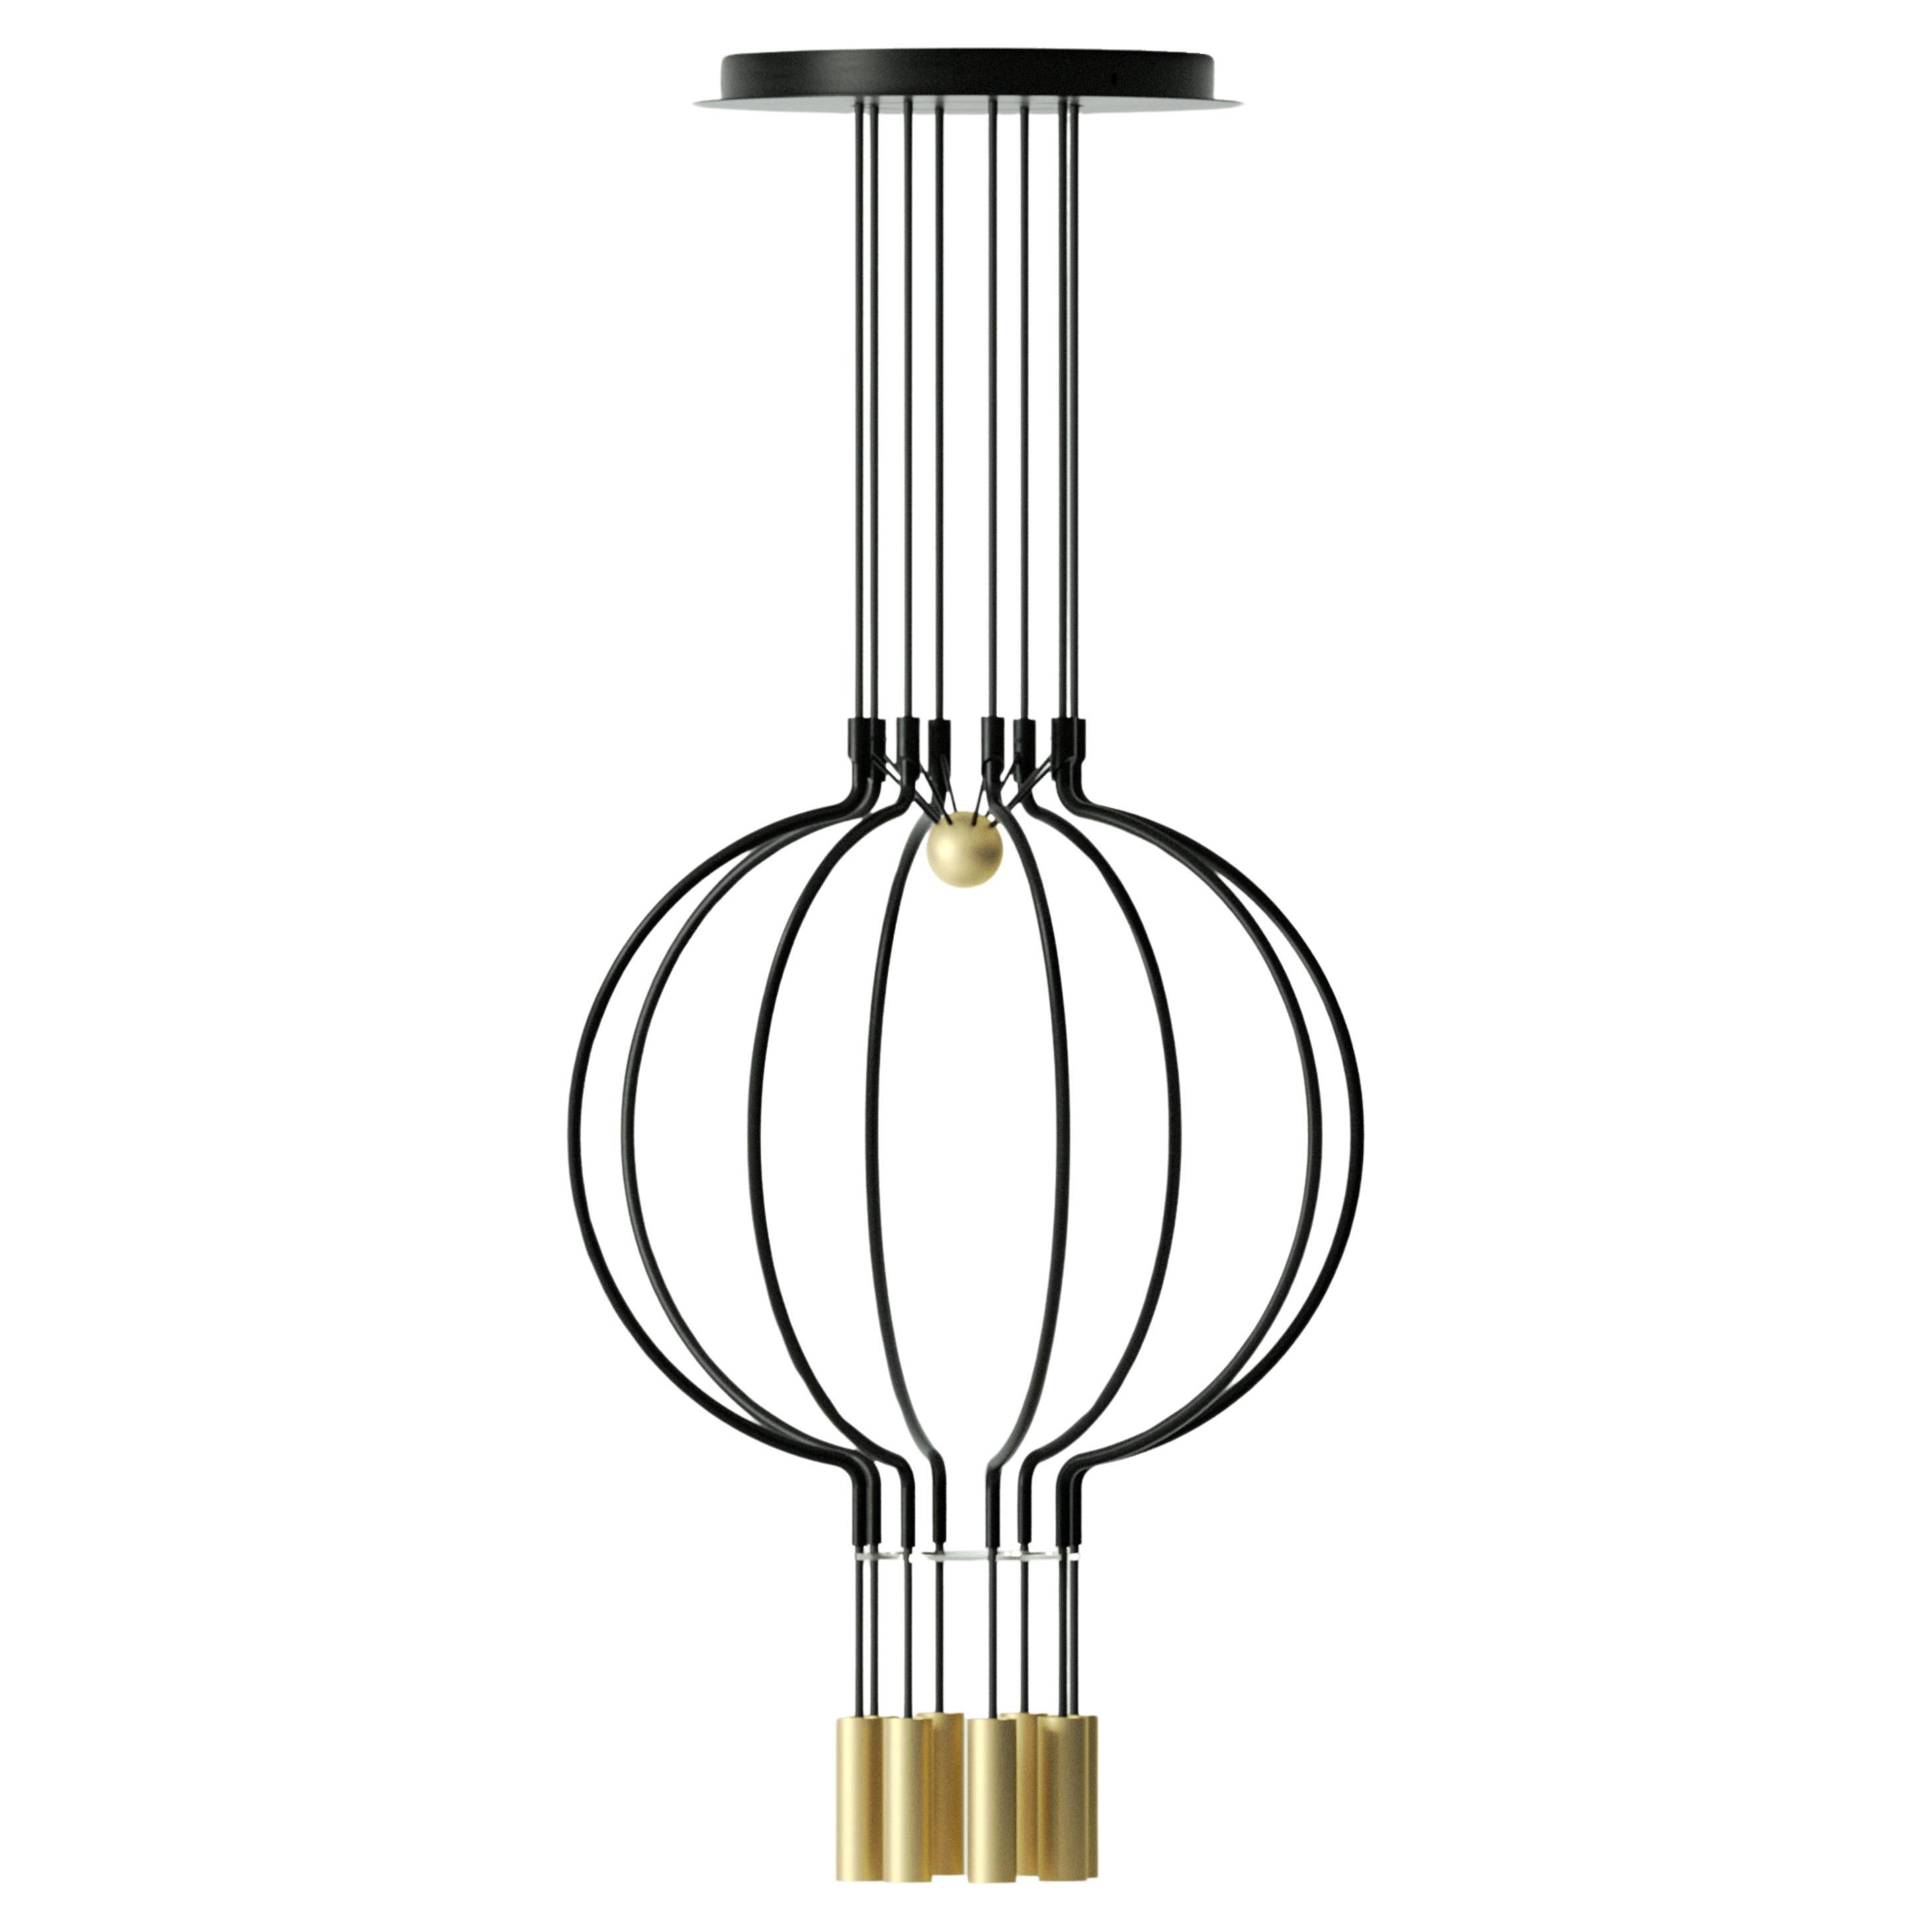 Axolight Liaison Model P8 Pendant Lamp in Black/Gold by Sara Moroni